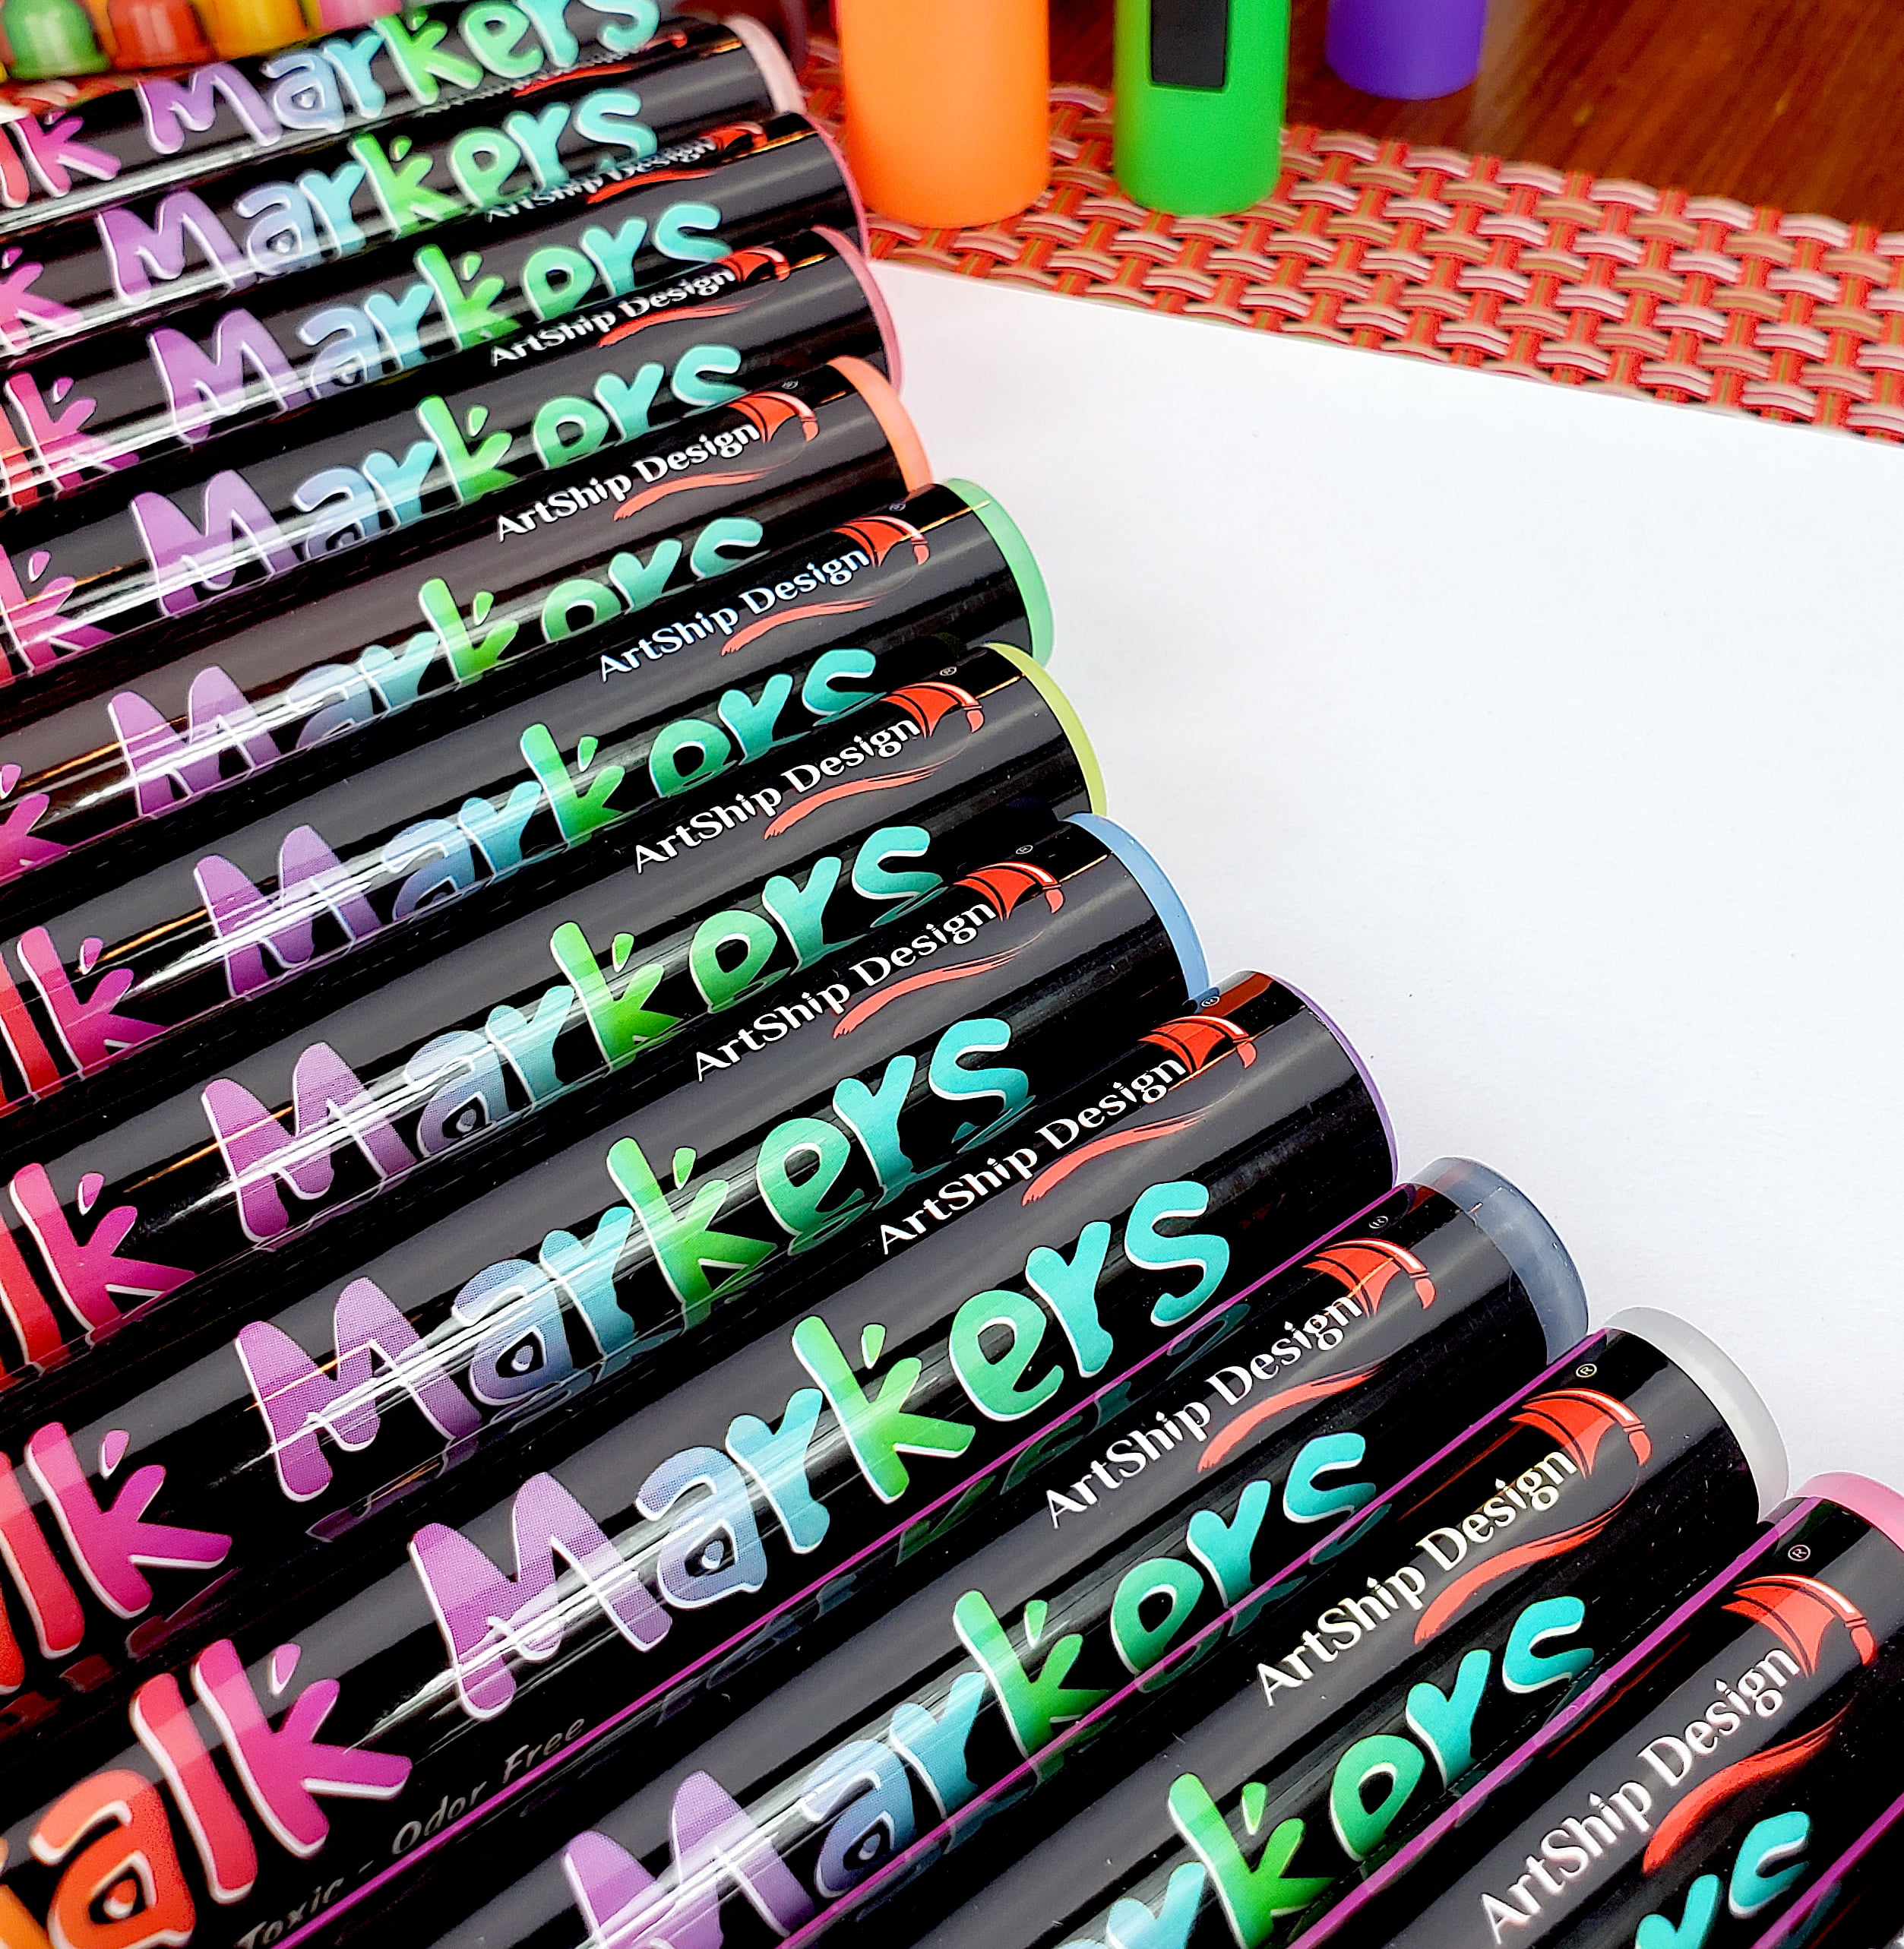 9 Jumbo Chalk Markers - 15mm Tip, Wet Eraseable Liquid Chalk Pens by  ArtShip Design 